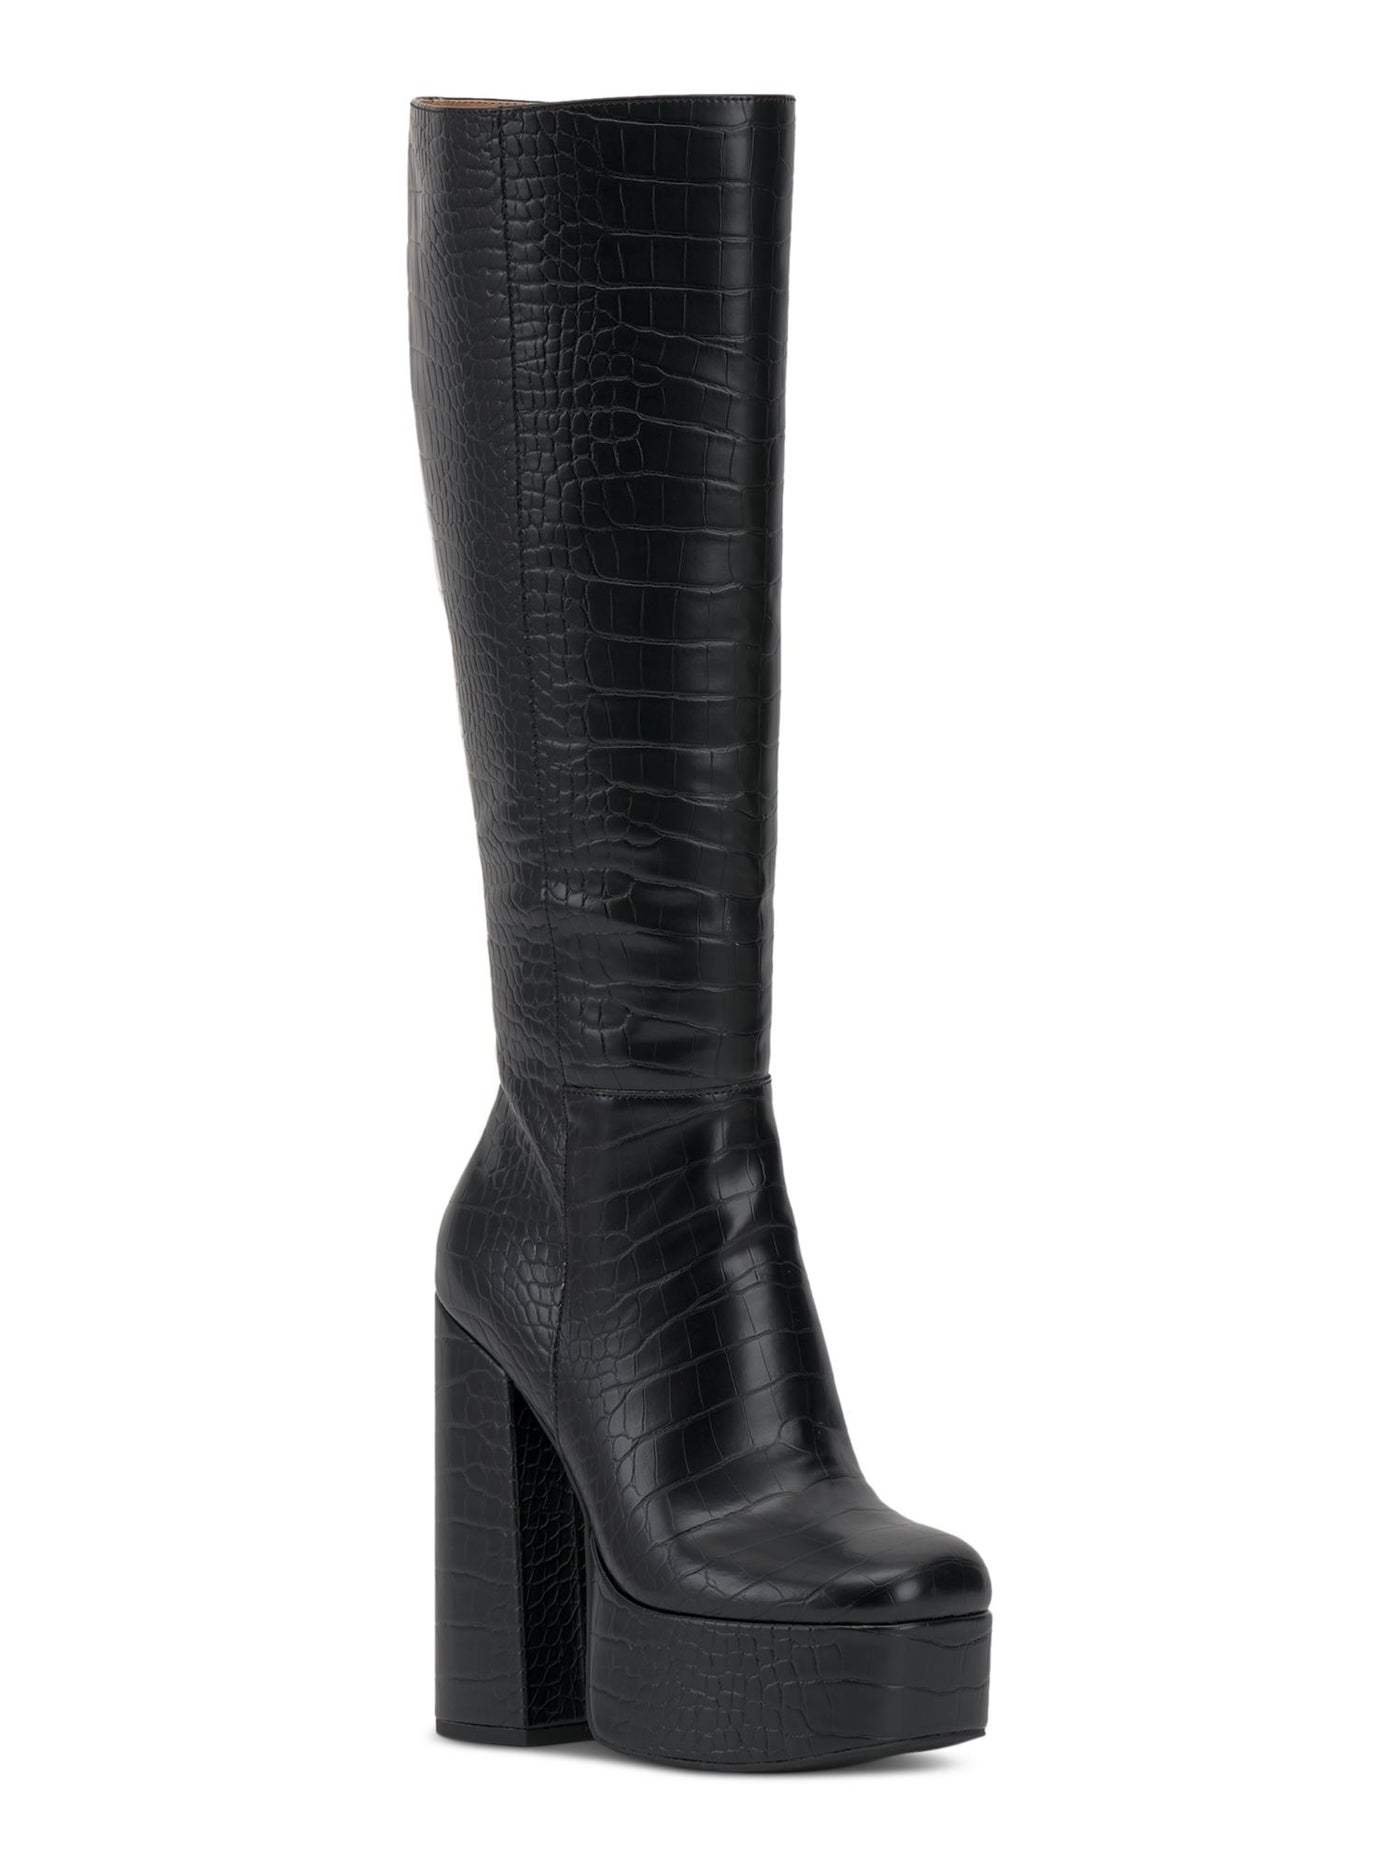 JESSICA SIMPSON Womens Black Animal Print 2 Inch Platform Goring Padded Samah Square Toe Block Heel Zip-Up Dress Boots 11 M